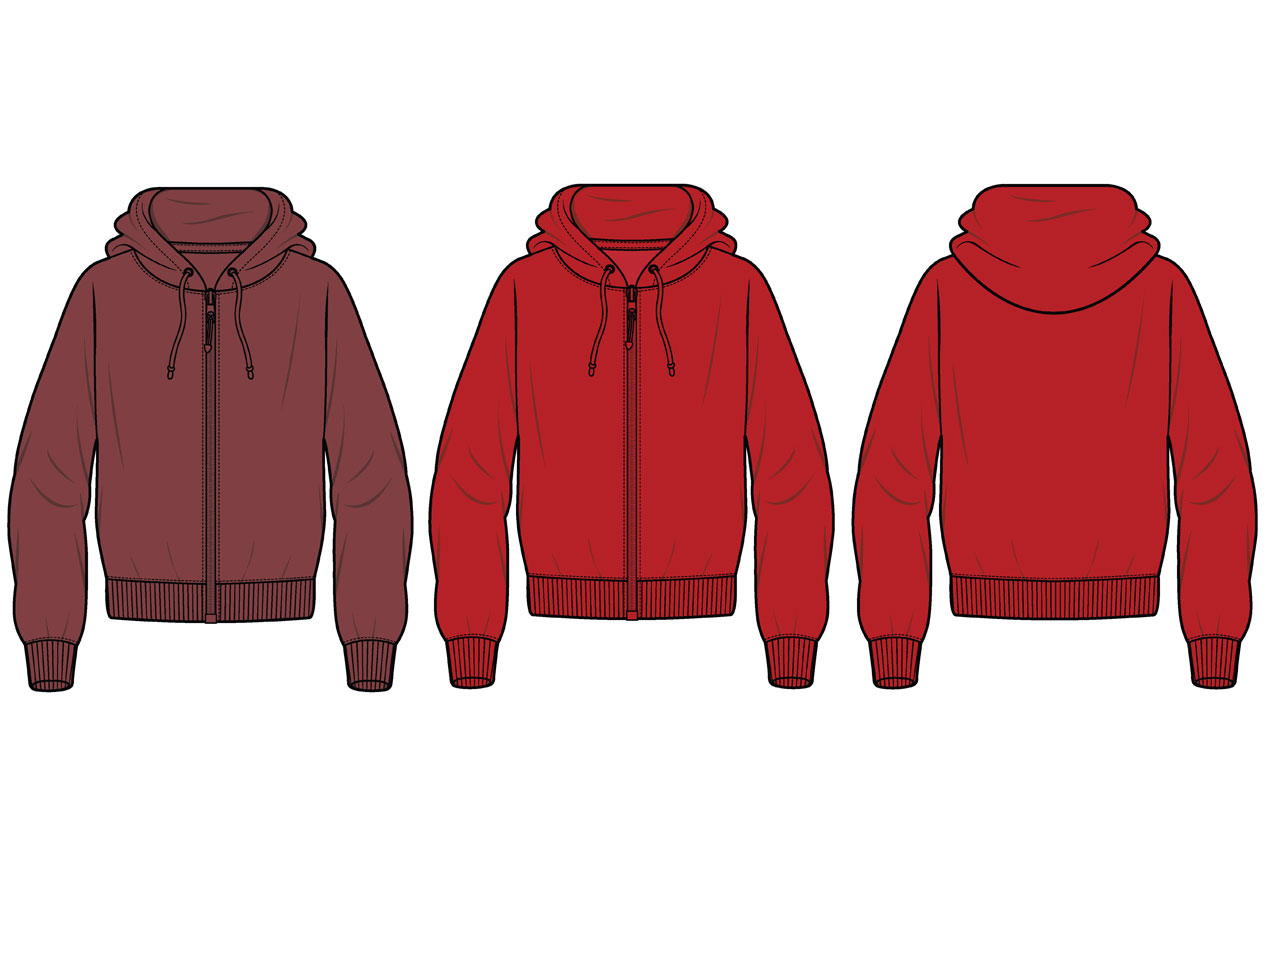 Contrast hoodie shirt design flat technical drawing cartoon illustration